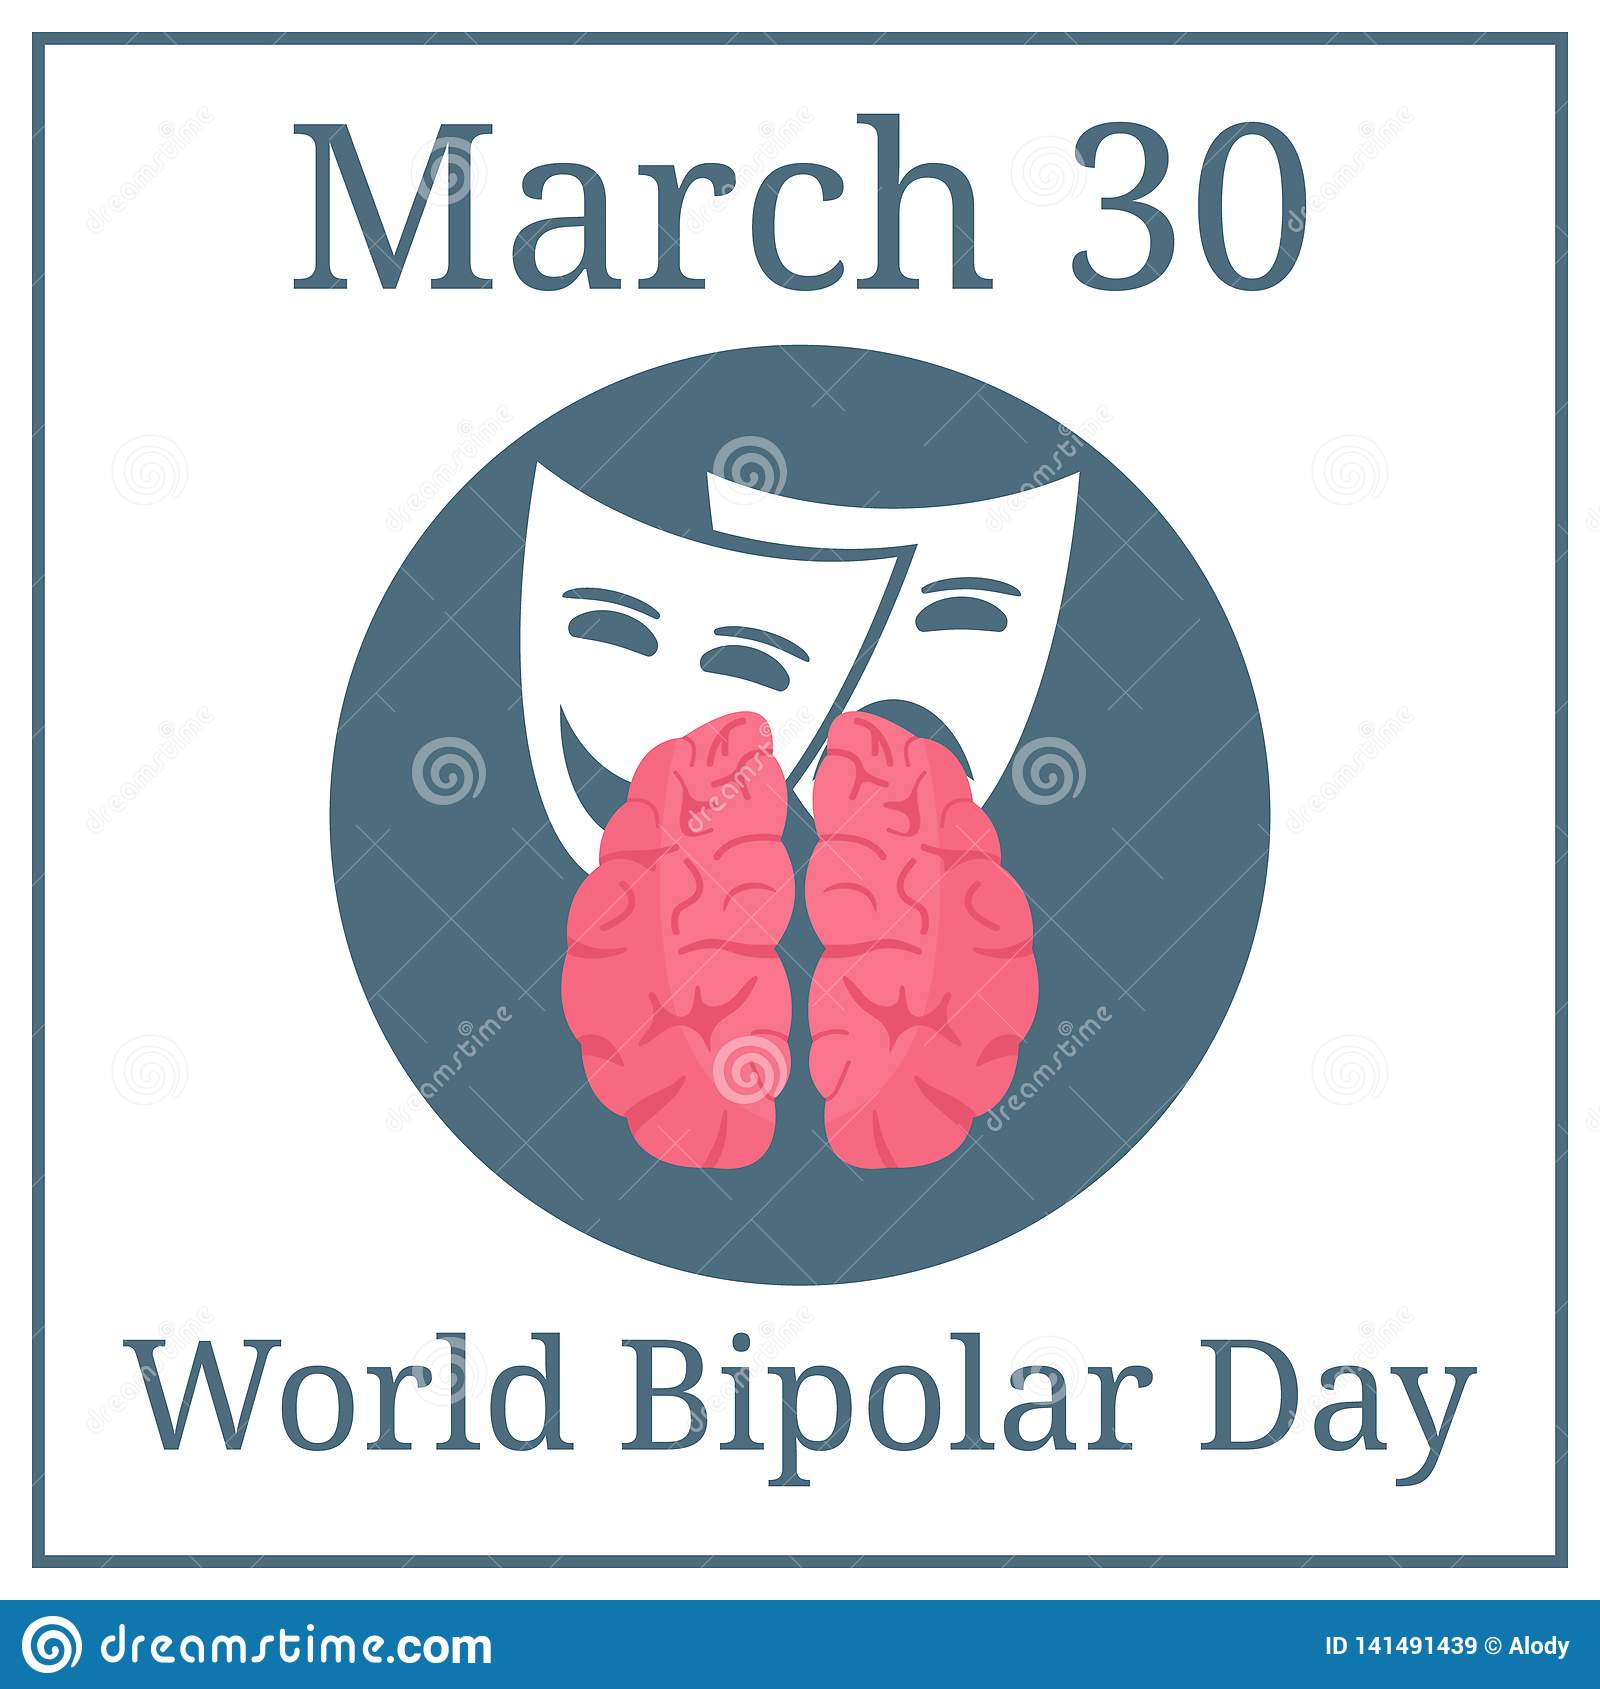 'World Bipolar Day' Understanding and Sensitivity